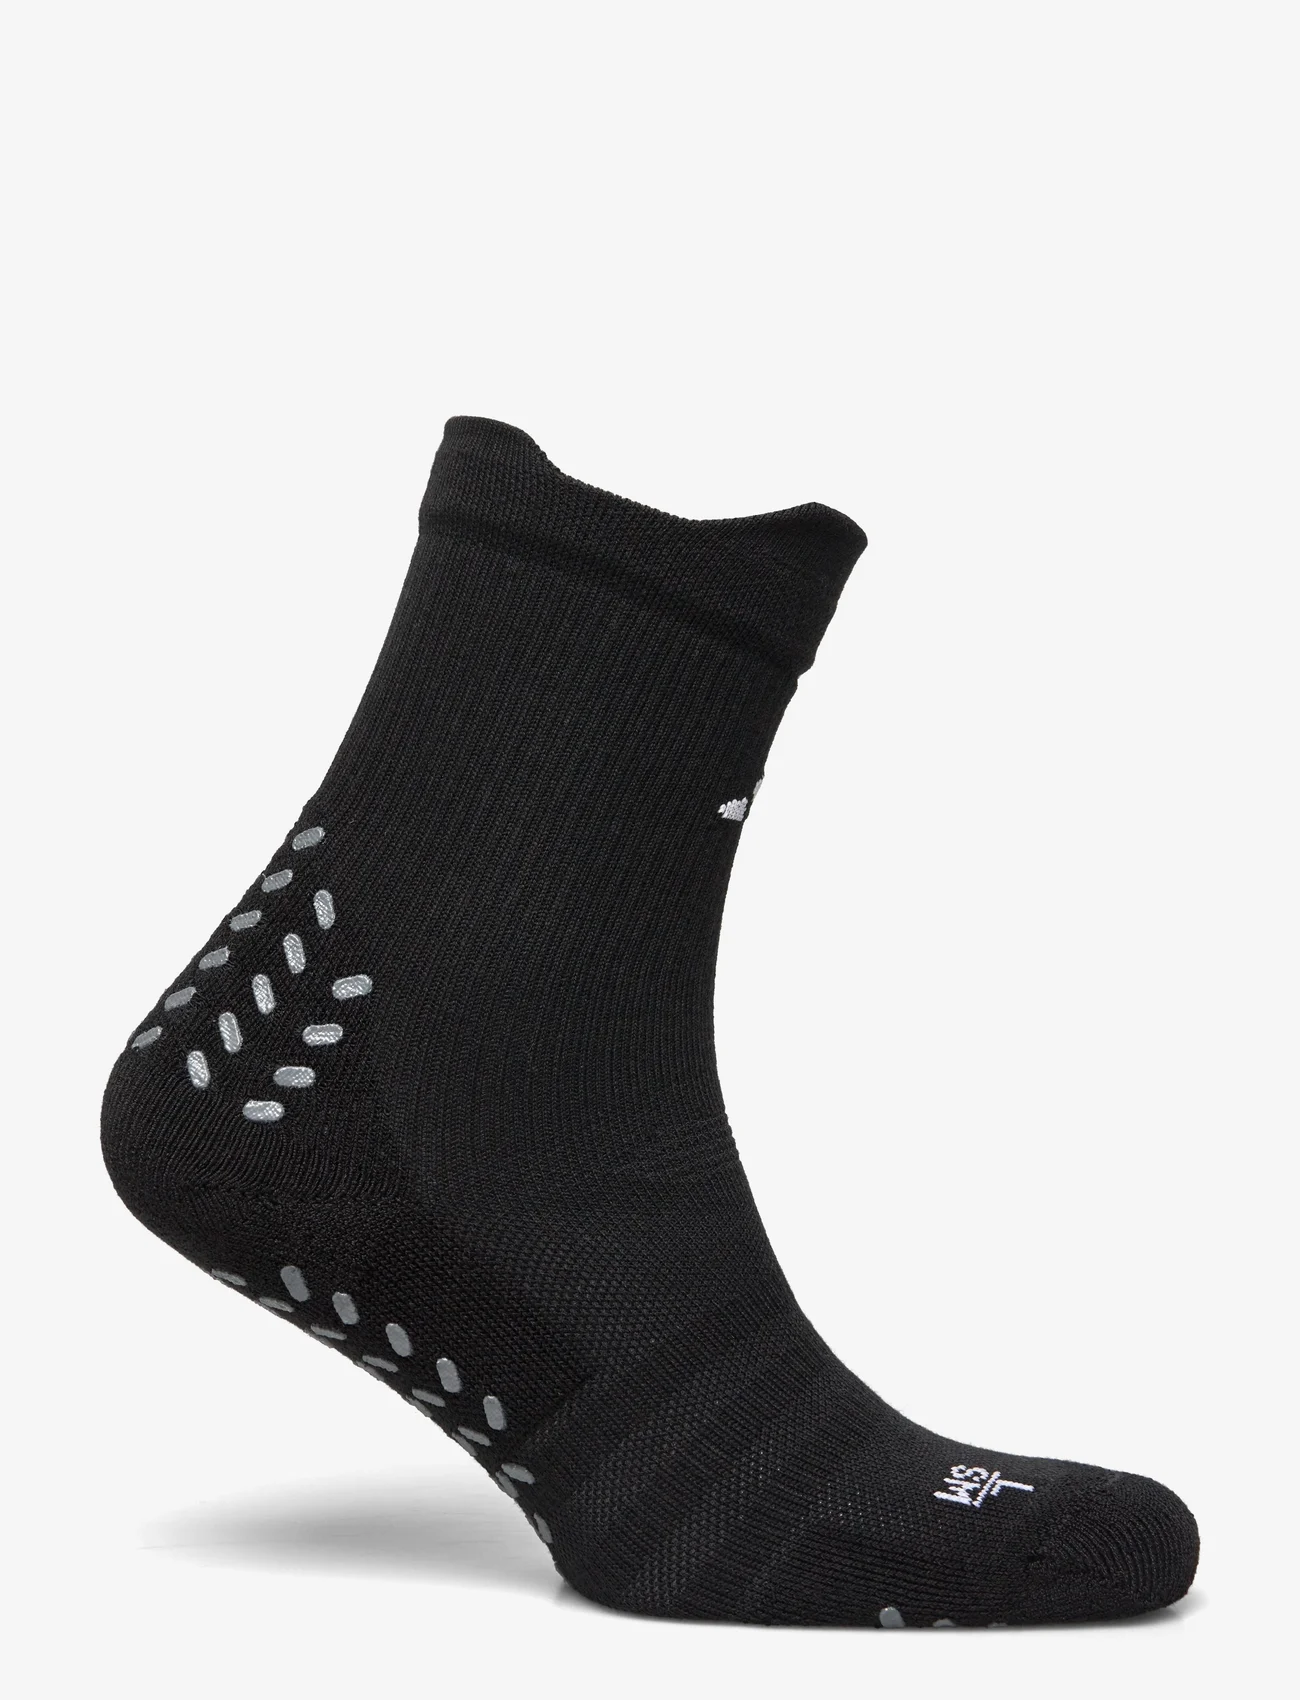 adidas Performance - Adidas Football GRIP Printed Crew Performance Socks Cushioned - laagste prijzen - black/white - 1